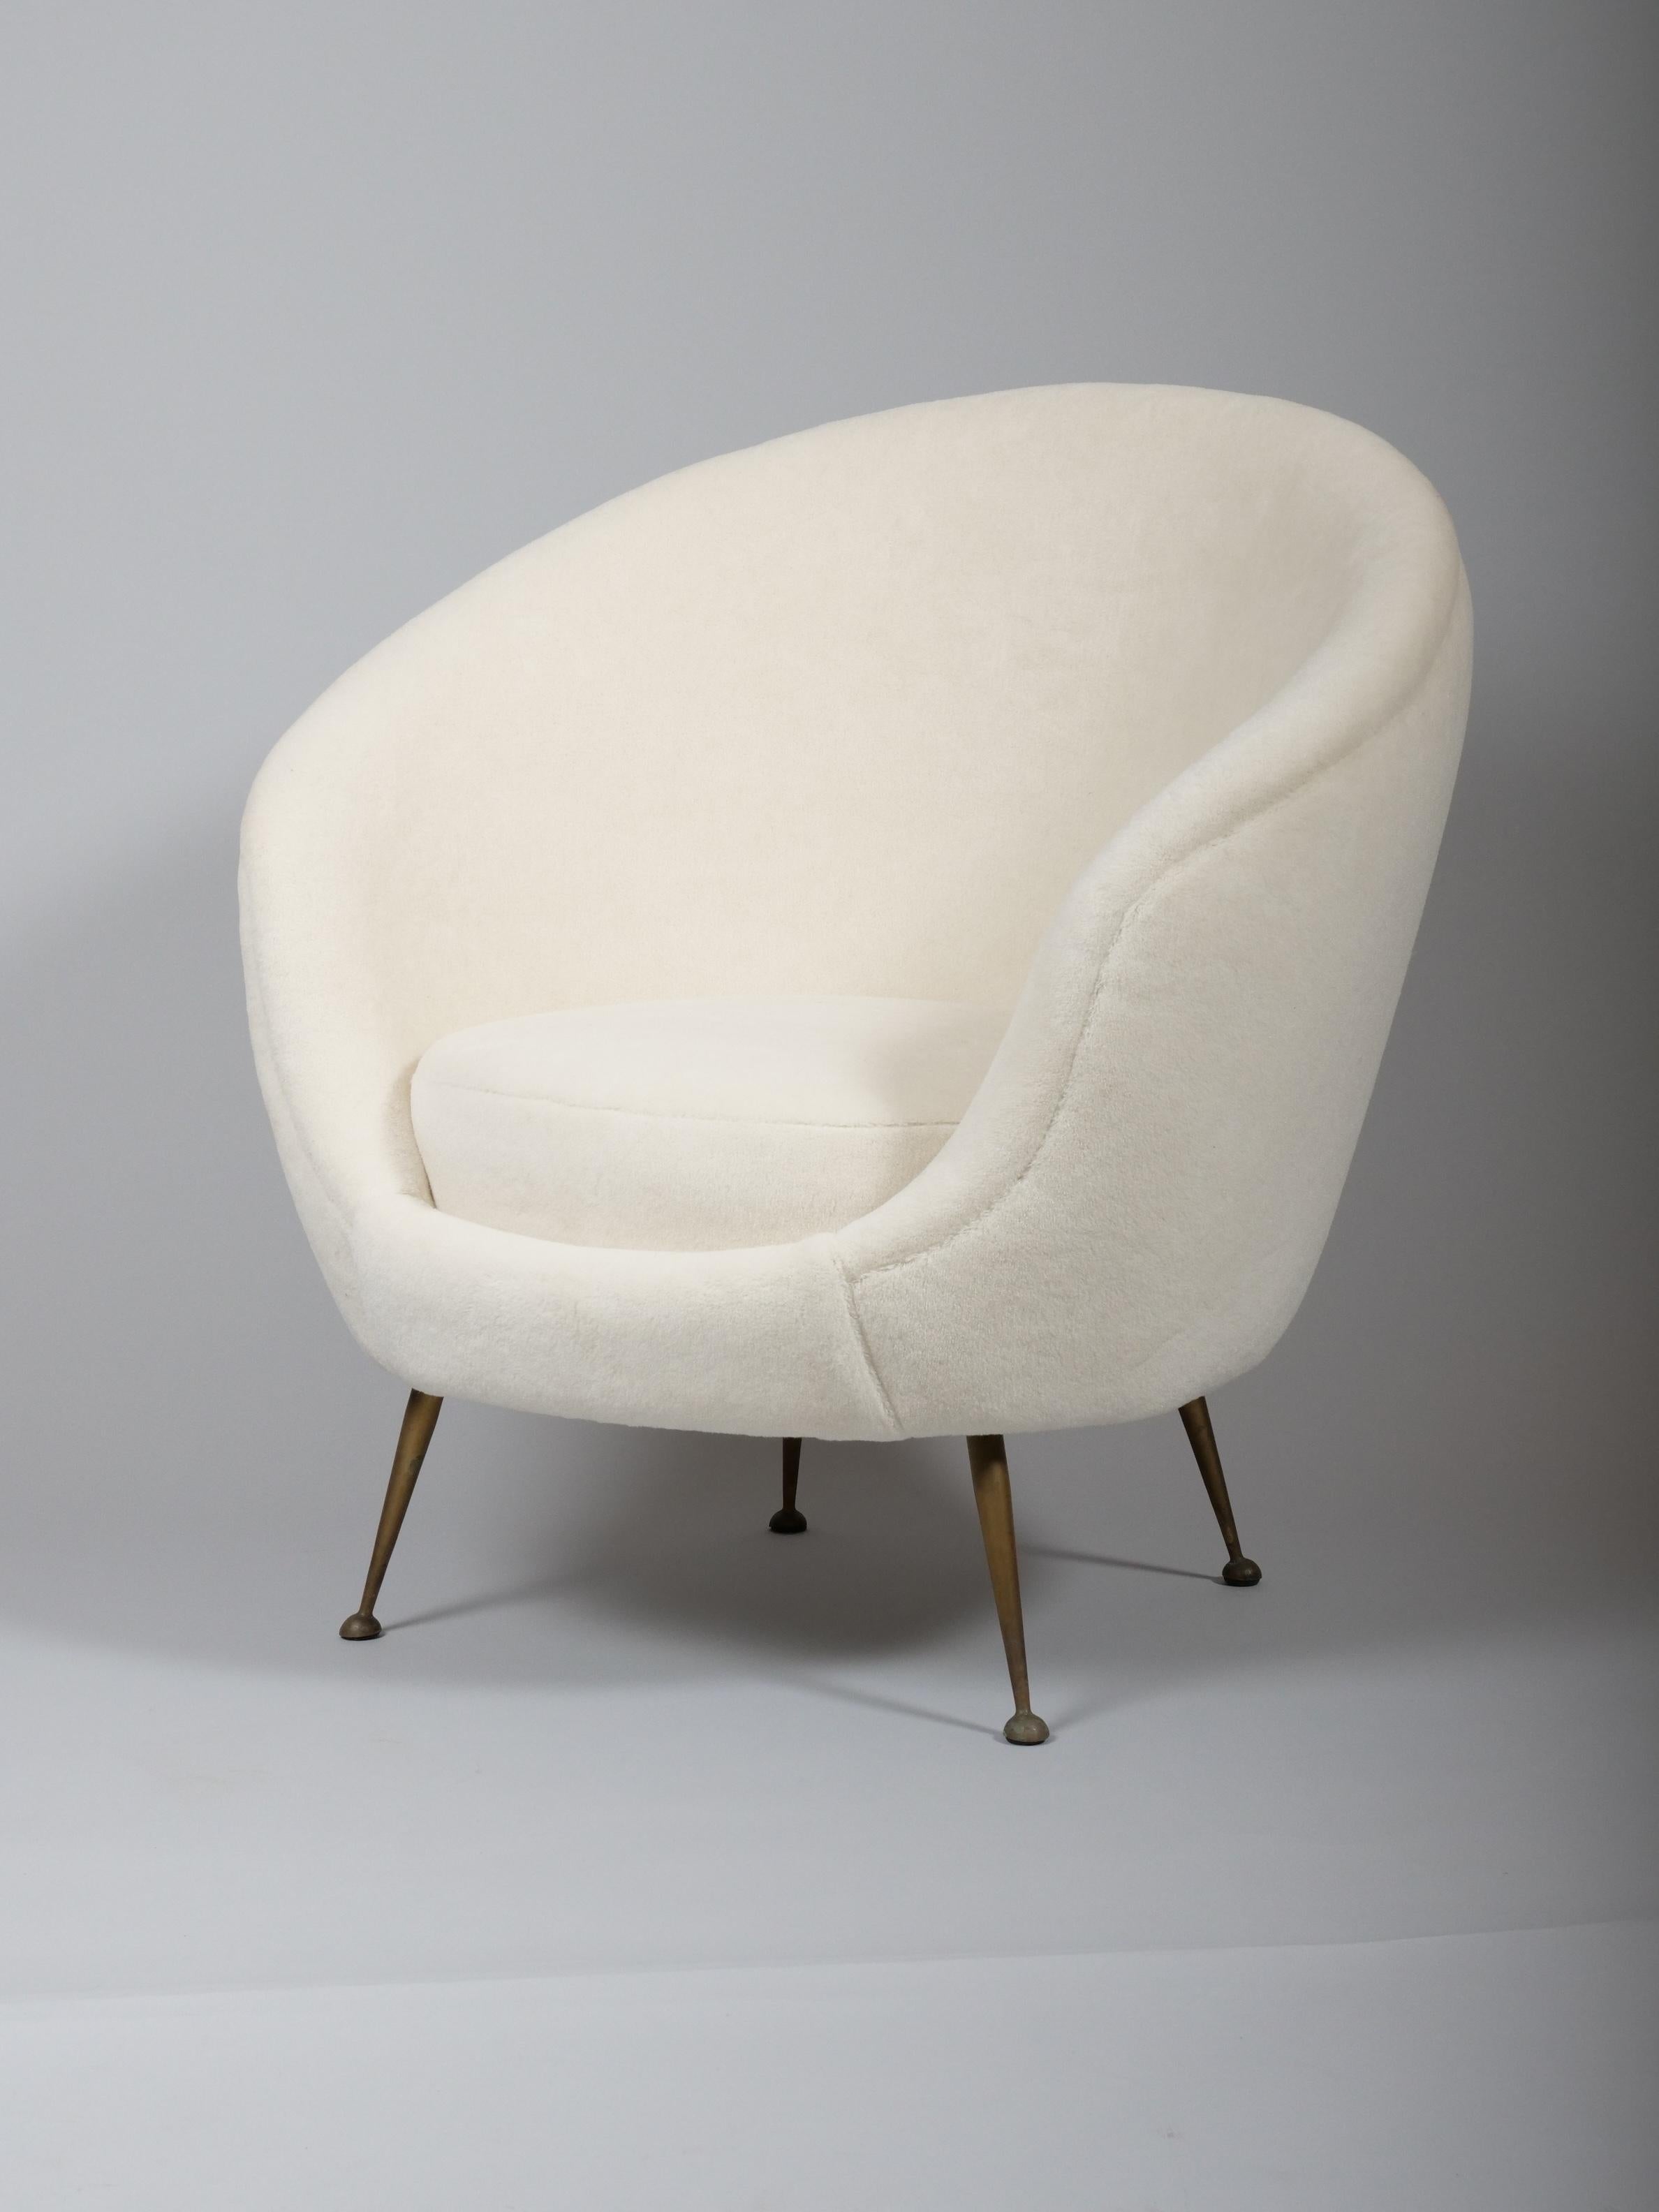 Pair Italian mid century egg shape chairs. Re upholstered in Alpaca wool velvet For Sale 6